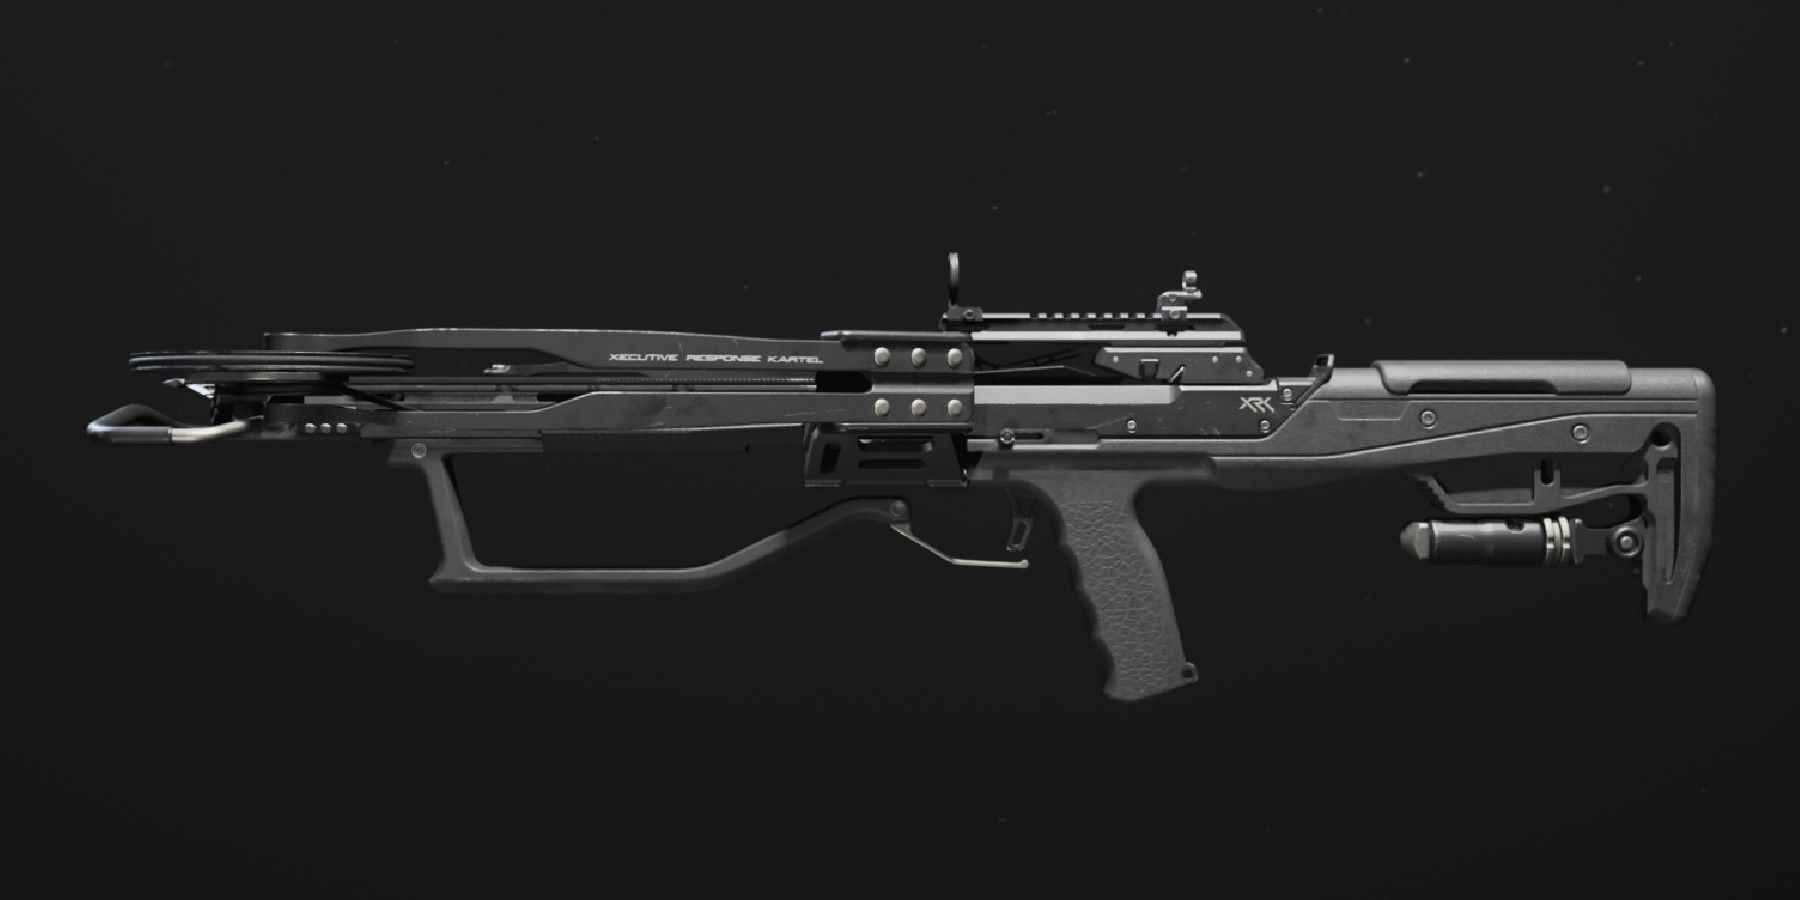 mw3 - weapon camos - crossbow